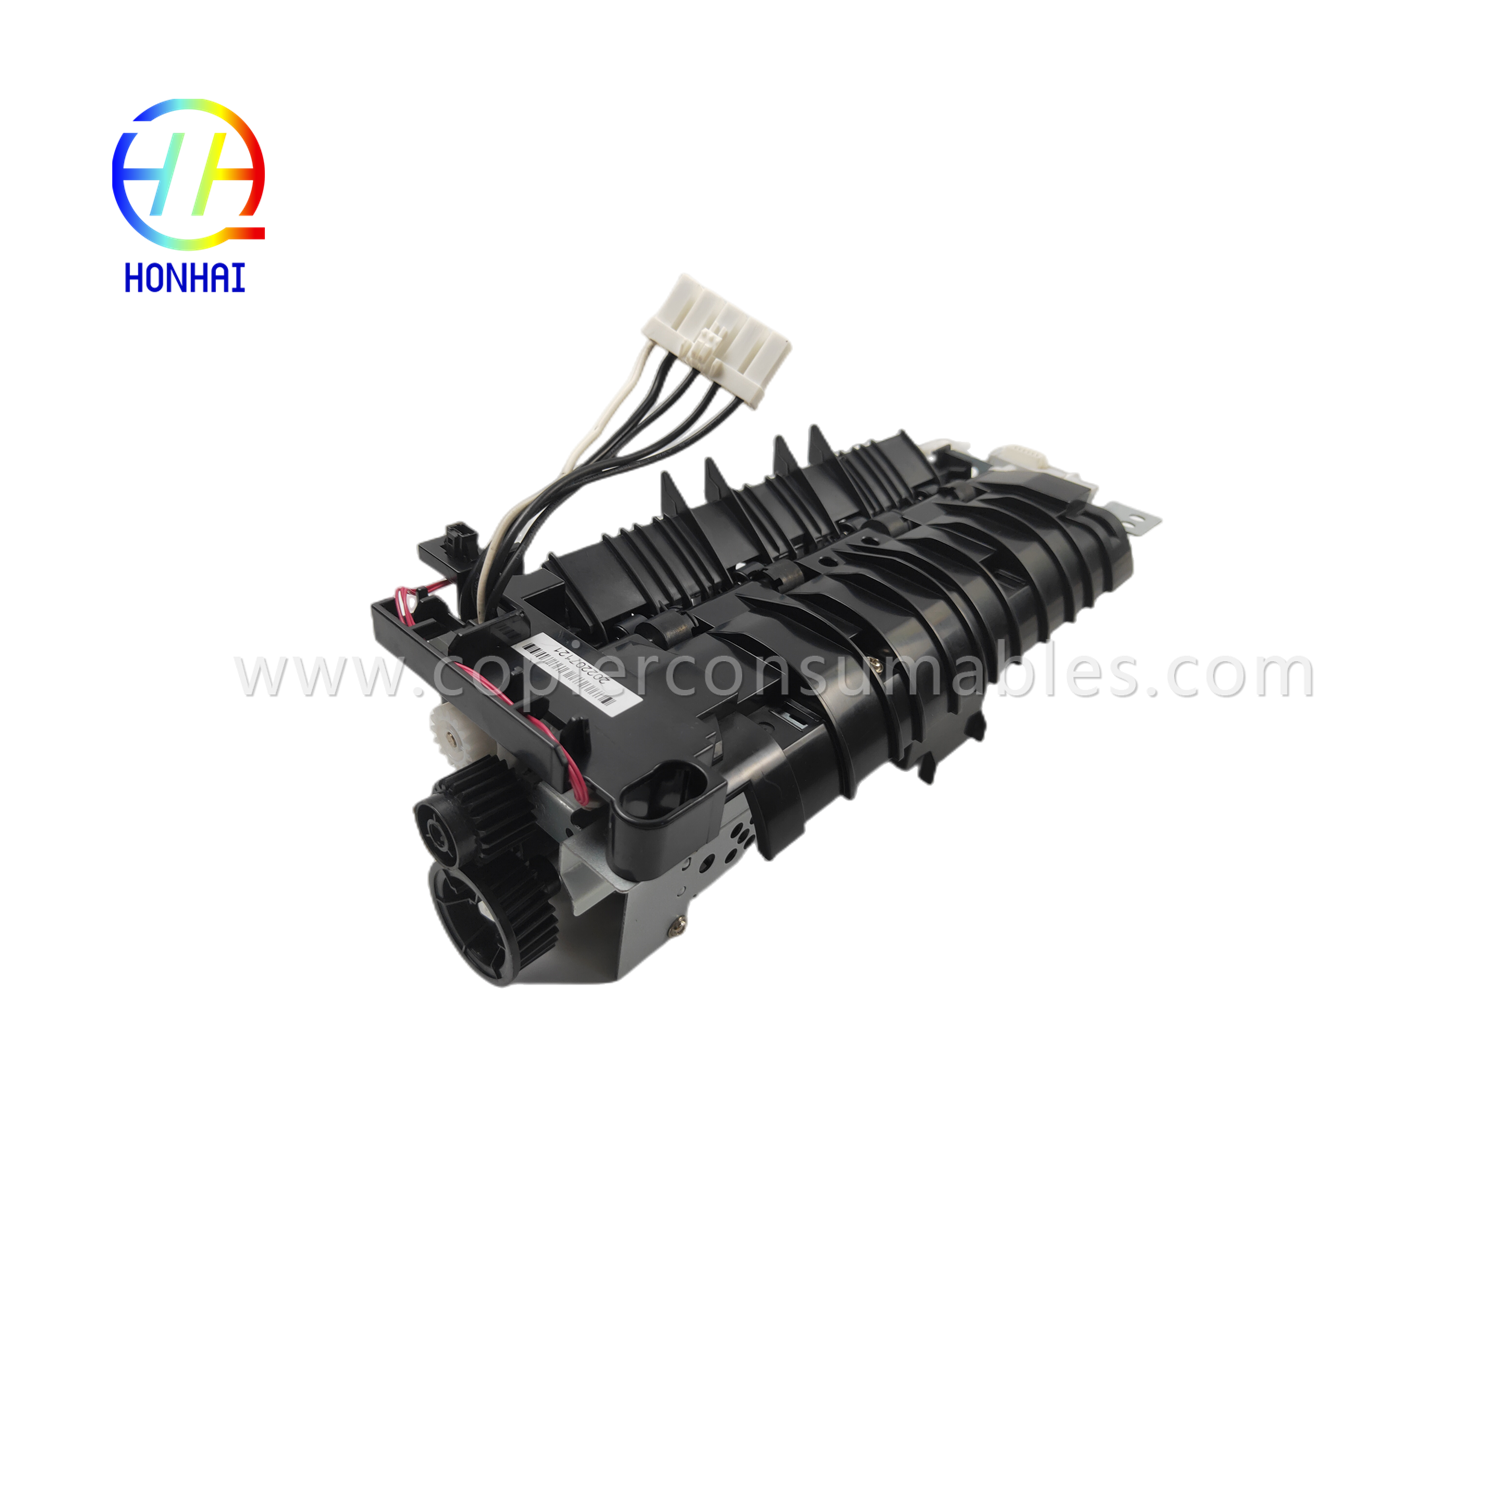 https://www.copierconsumables.com/fuser-assembly-220v-japan-for-hp-521-525-m521-m525-rm1-8508-rm1-8508-000-fuser-unit-product/